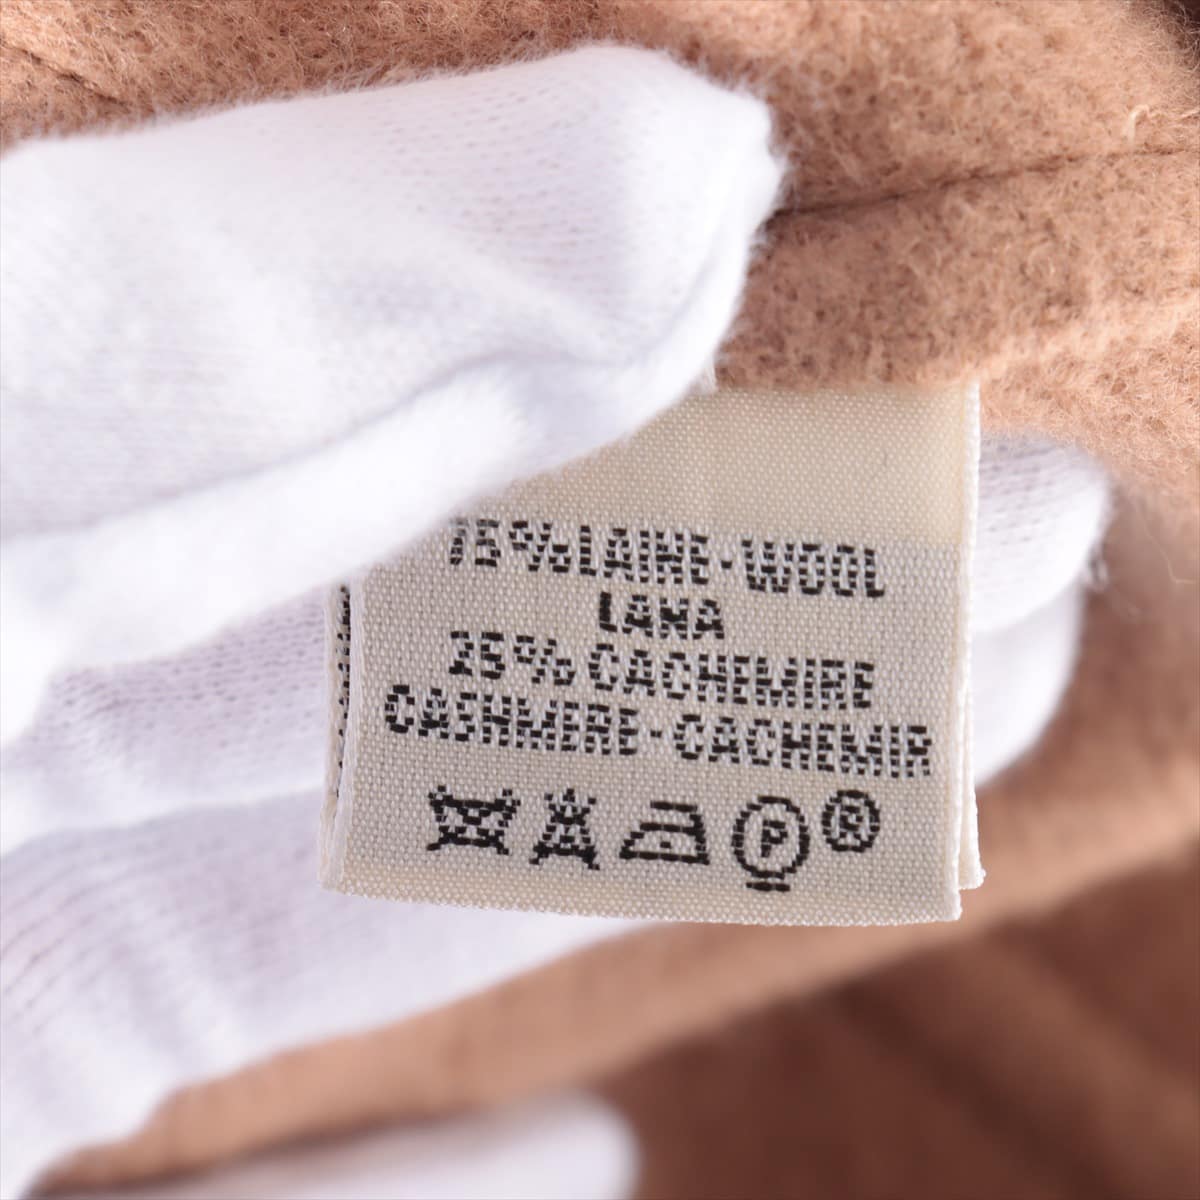 Hermès Margiela Wool & cashmere Short coat 38 Ladies' Camel  Apiberto Removable collar.